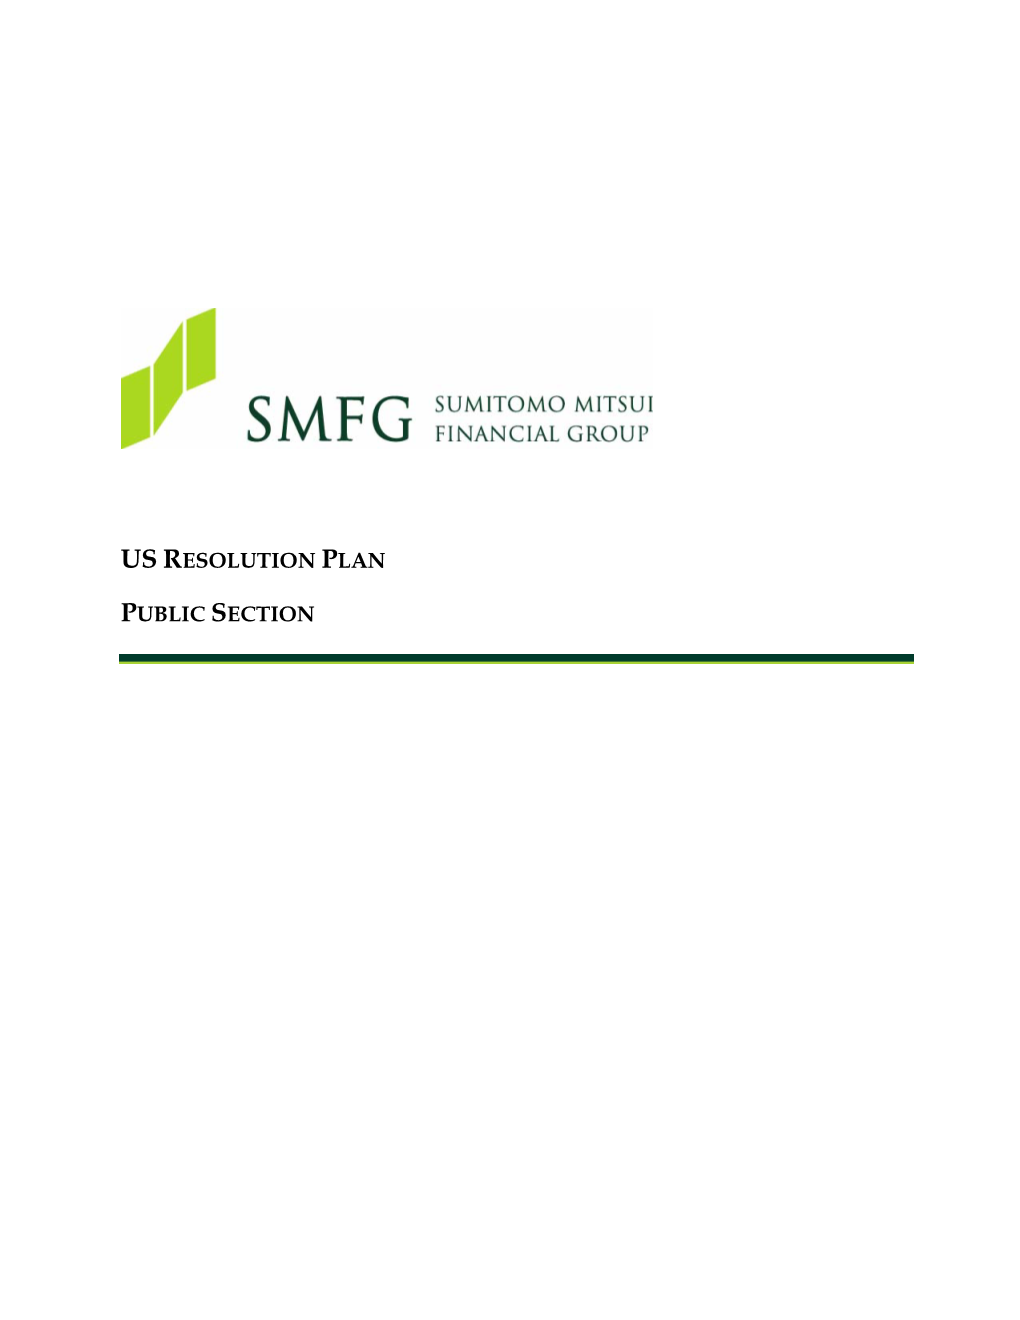 Sumitomo Mitsui Financial Group, Inc